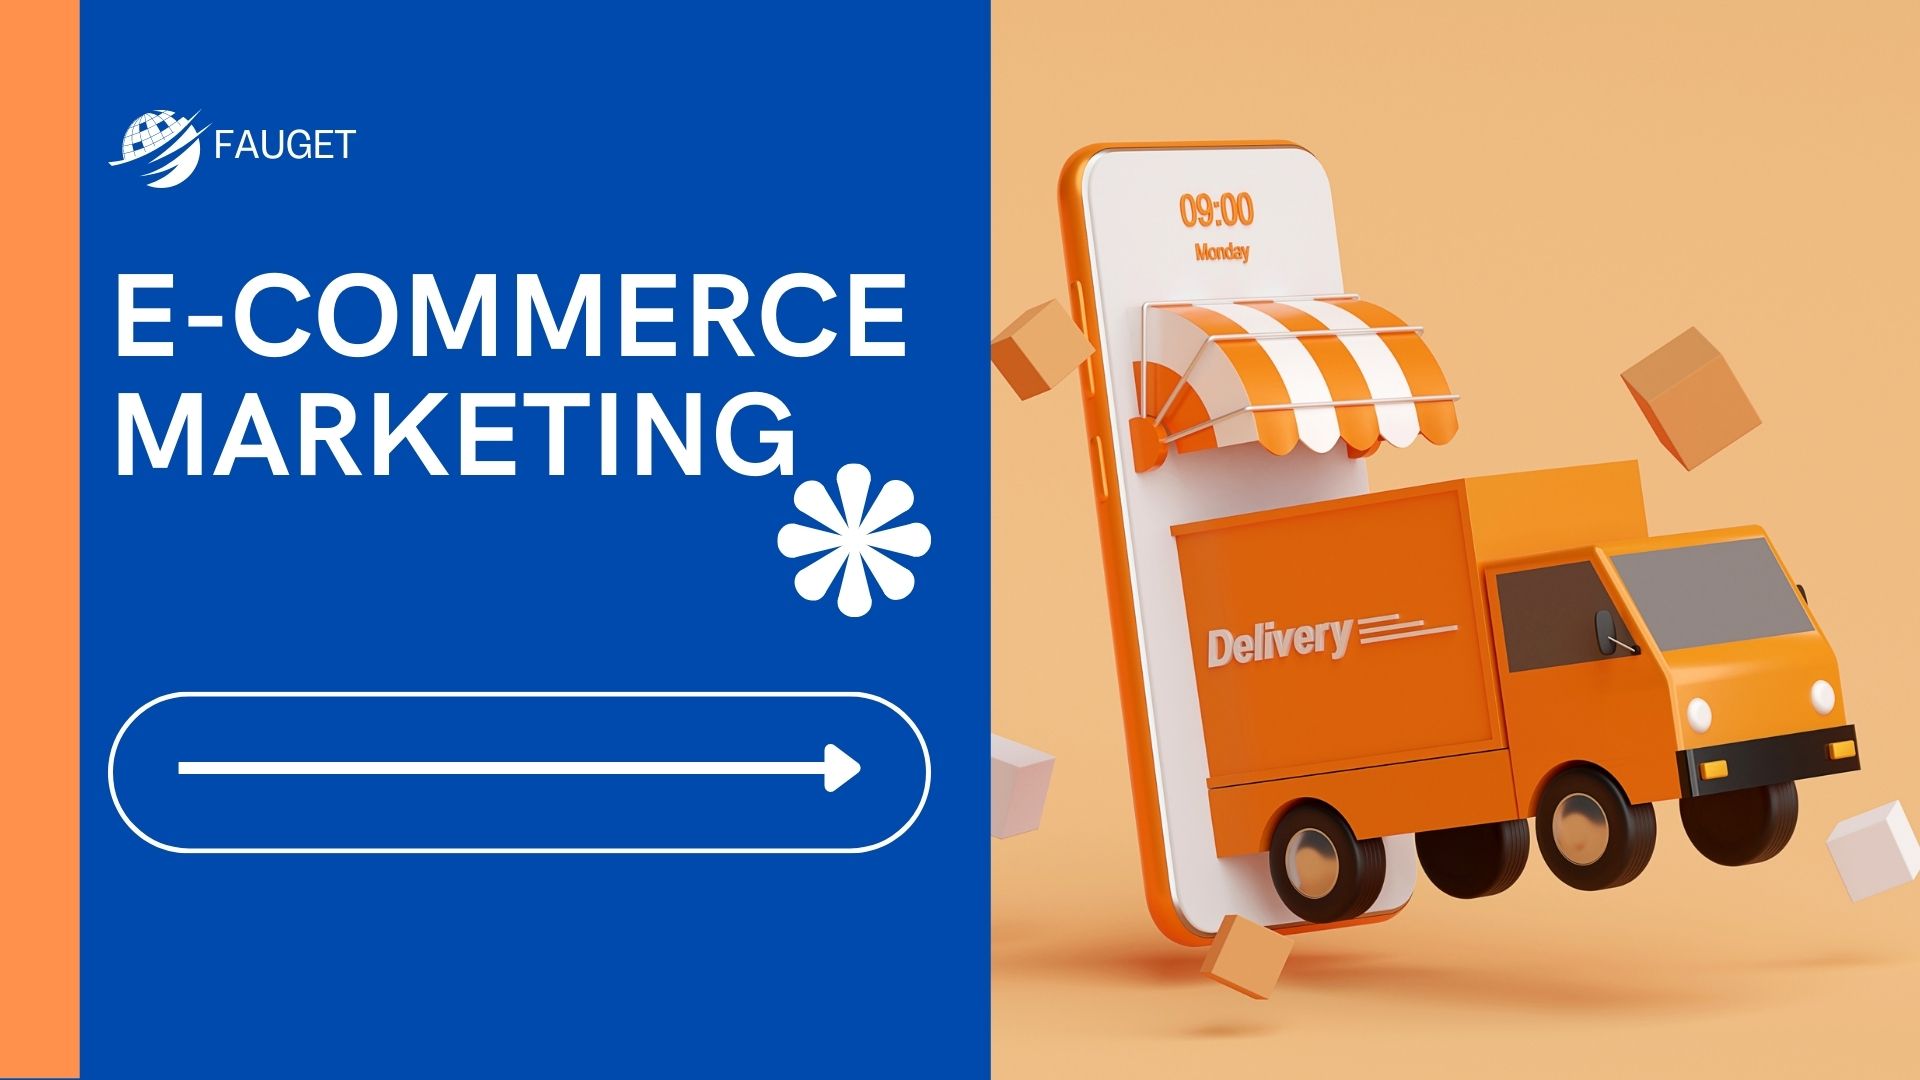 Developing e-commerce marketing strategy